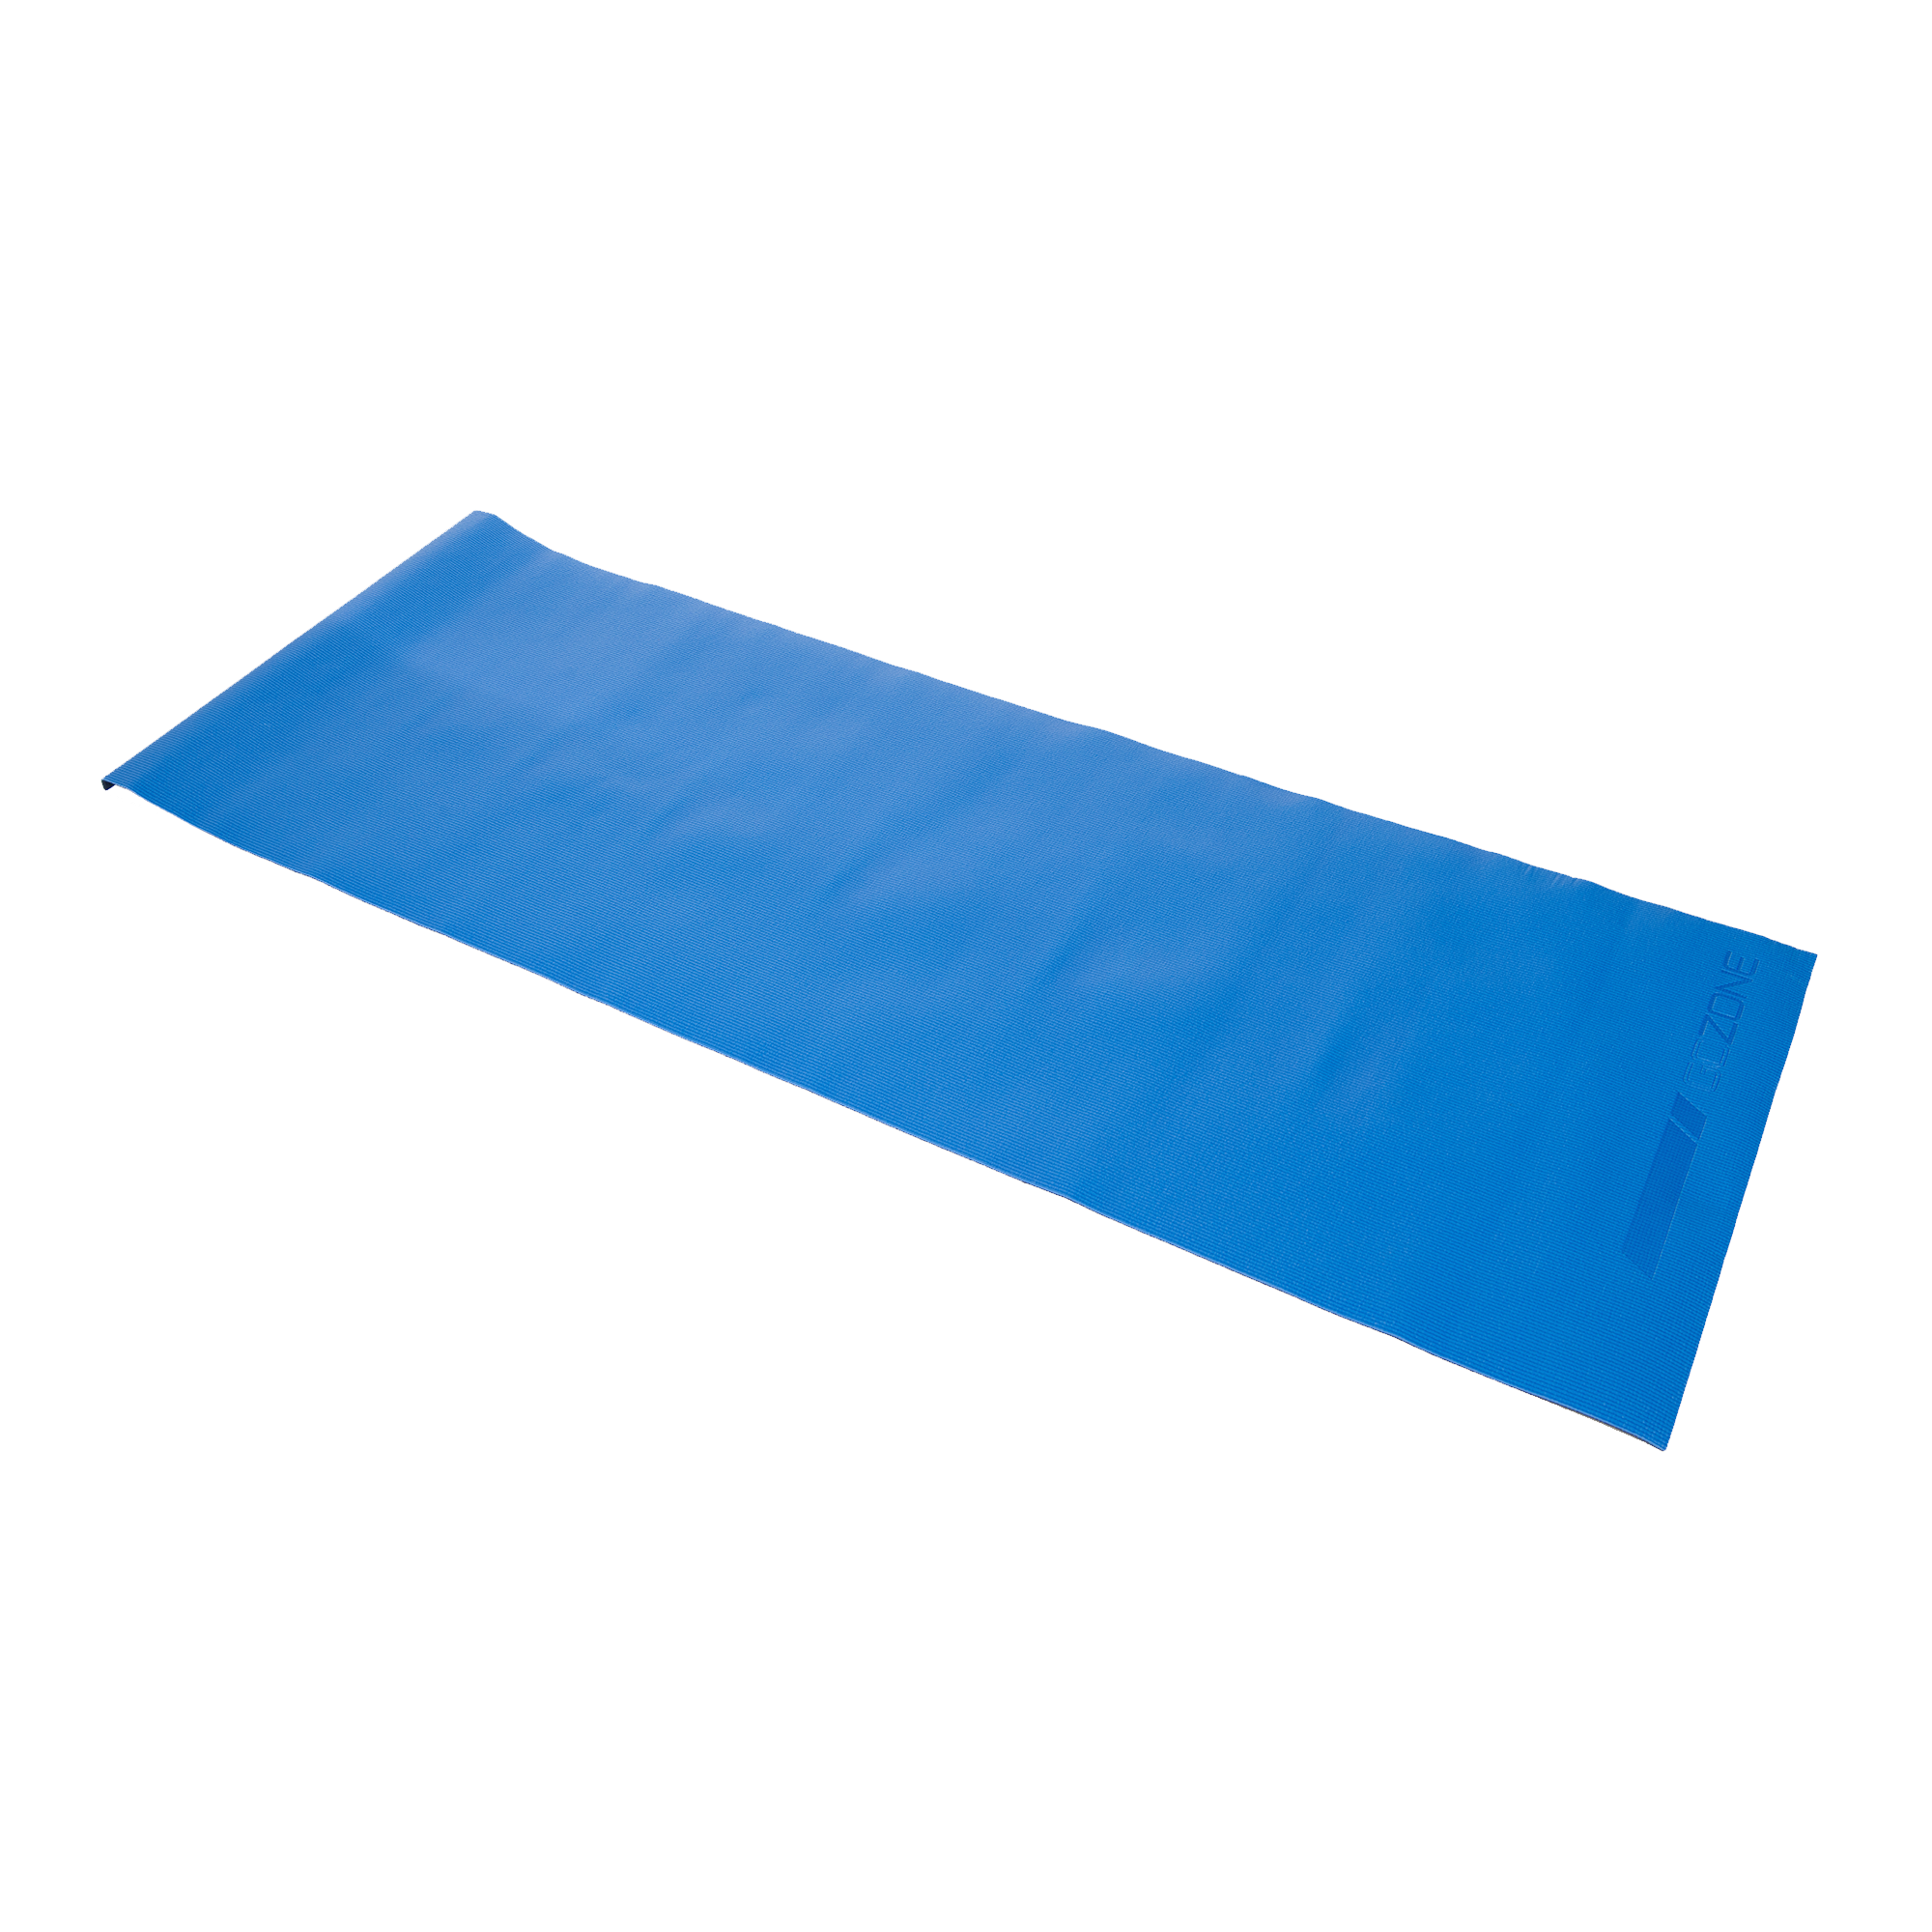 Exercise Mat Cushion 5mm PVC Free Sky Blue, Buy Exercise Mat Cushion 5mm  PVC Free Sky Blue here